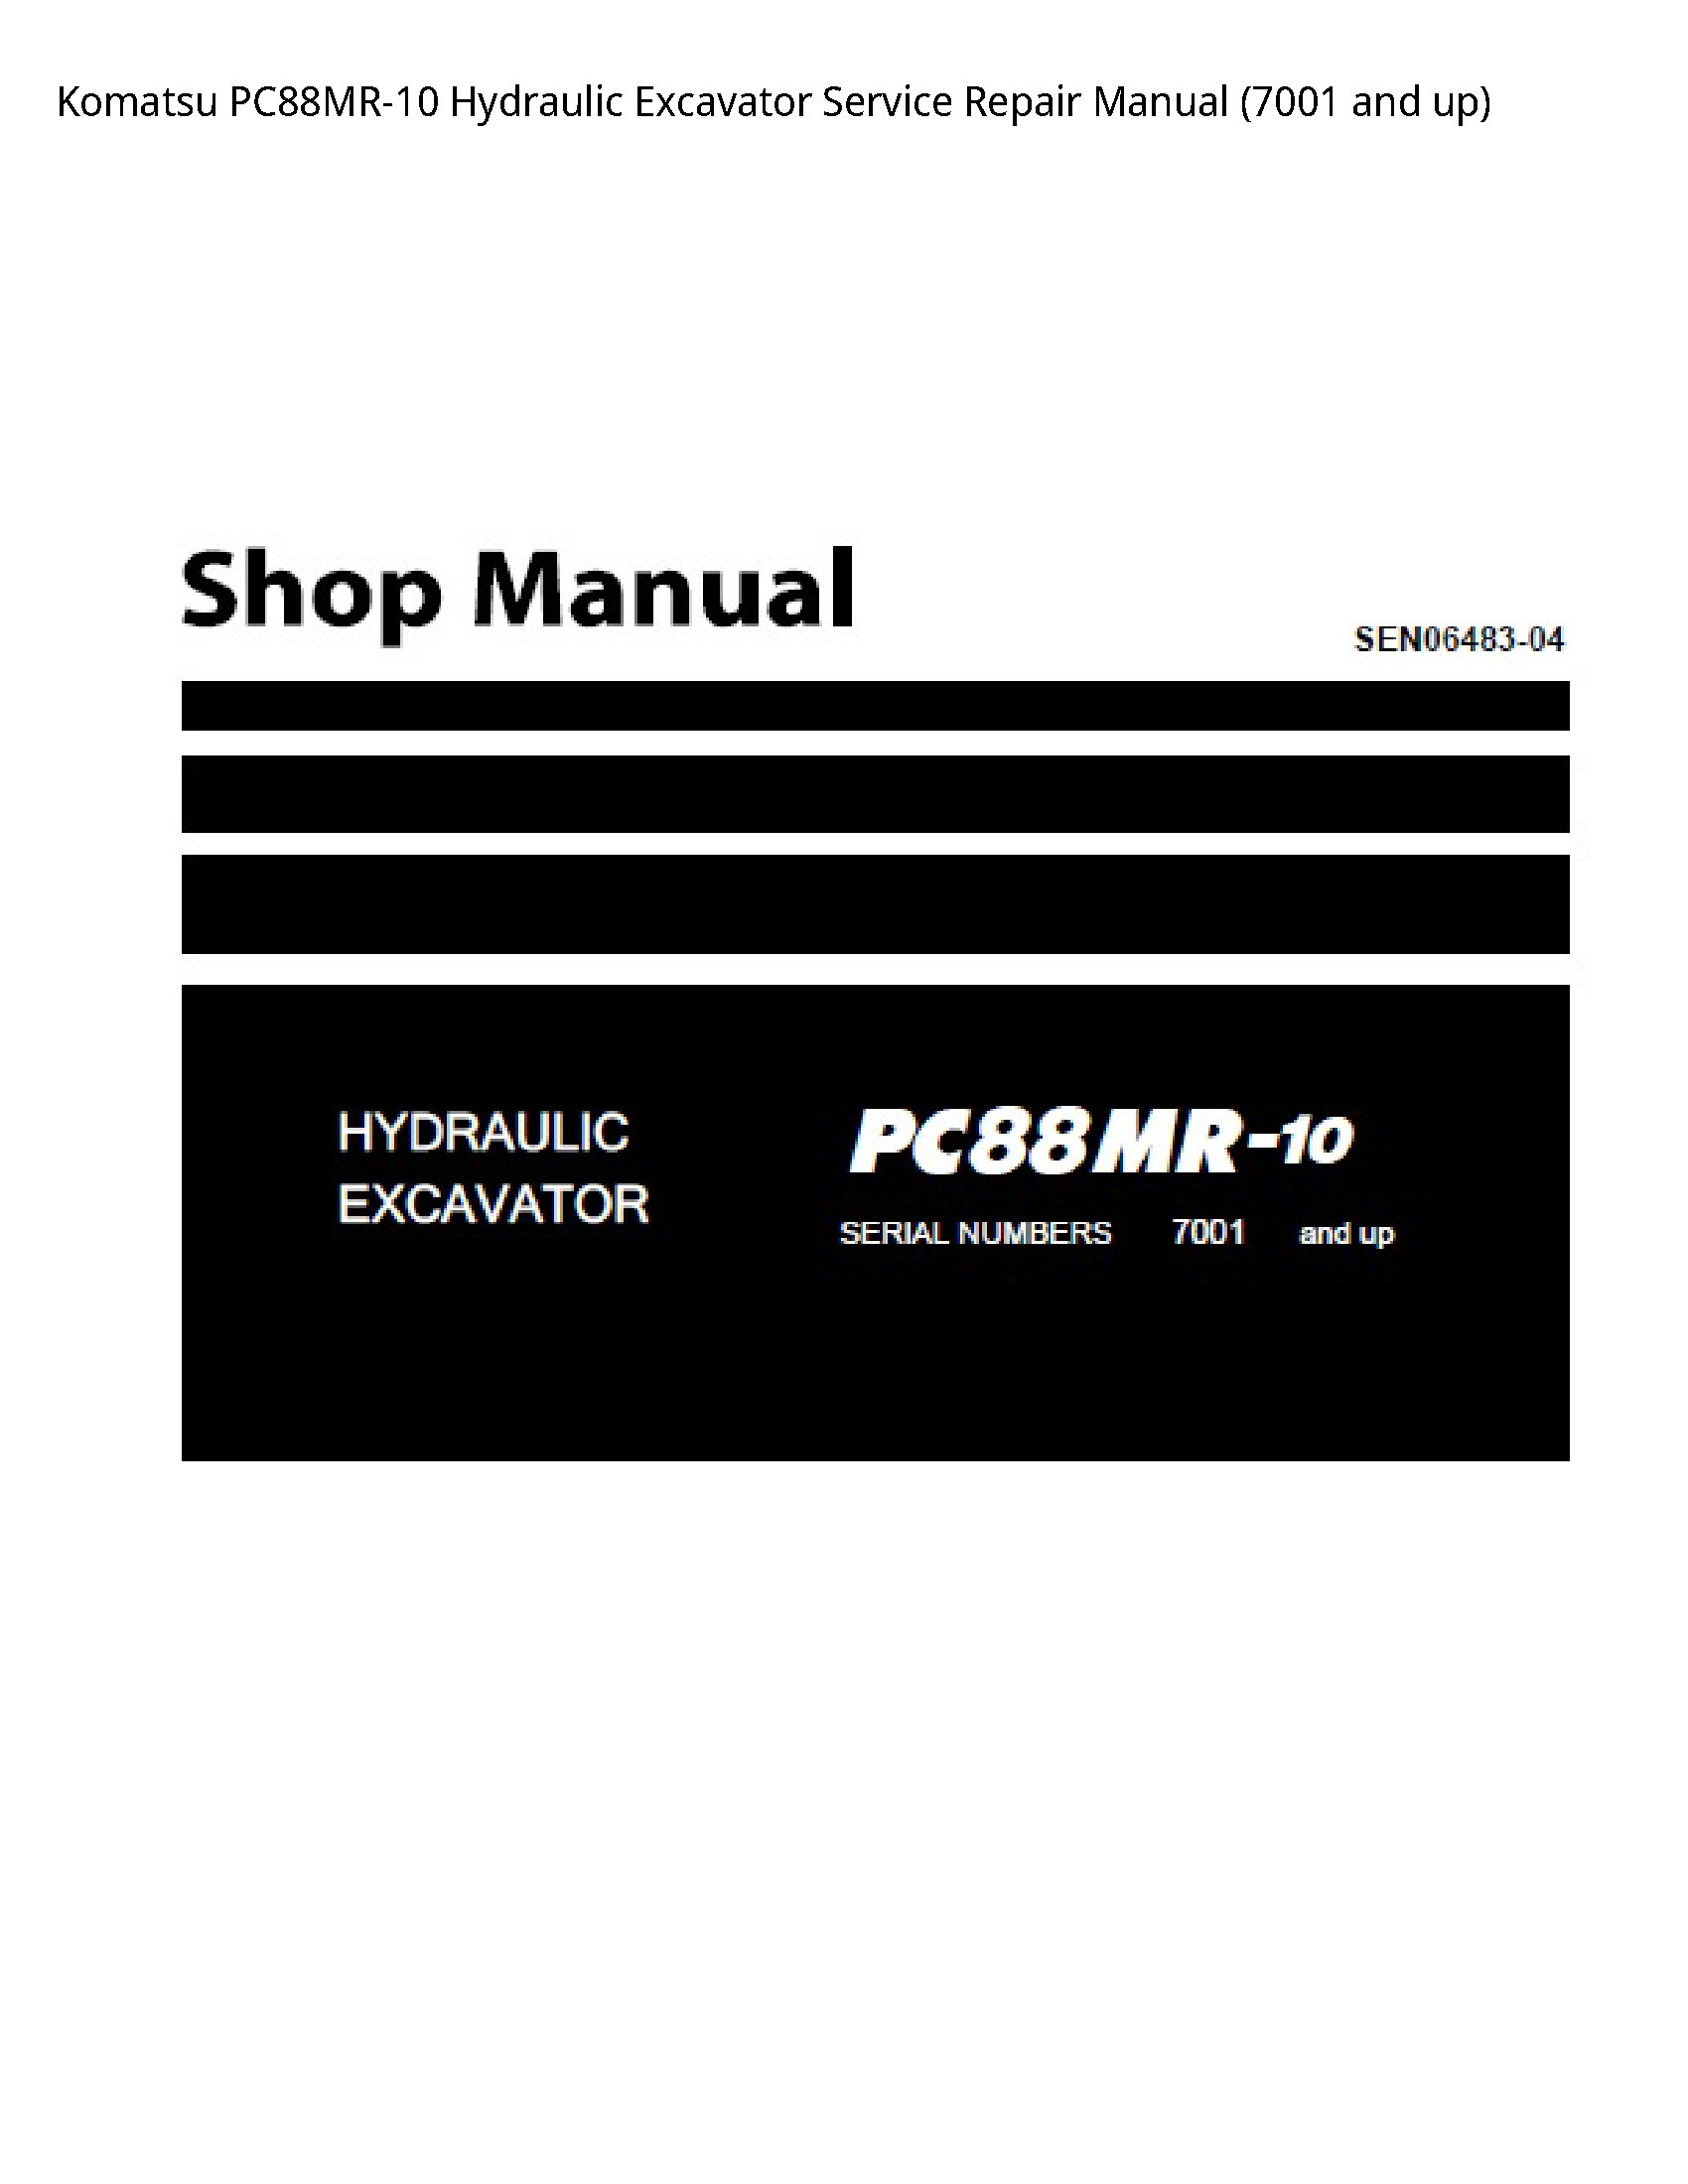 KOMATSU PC88MR-10 Hydraulic Excavator manual